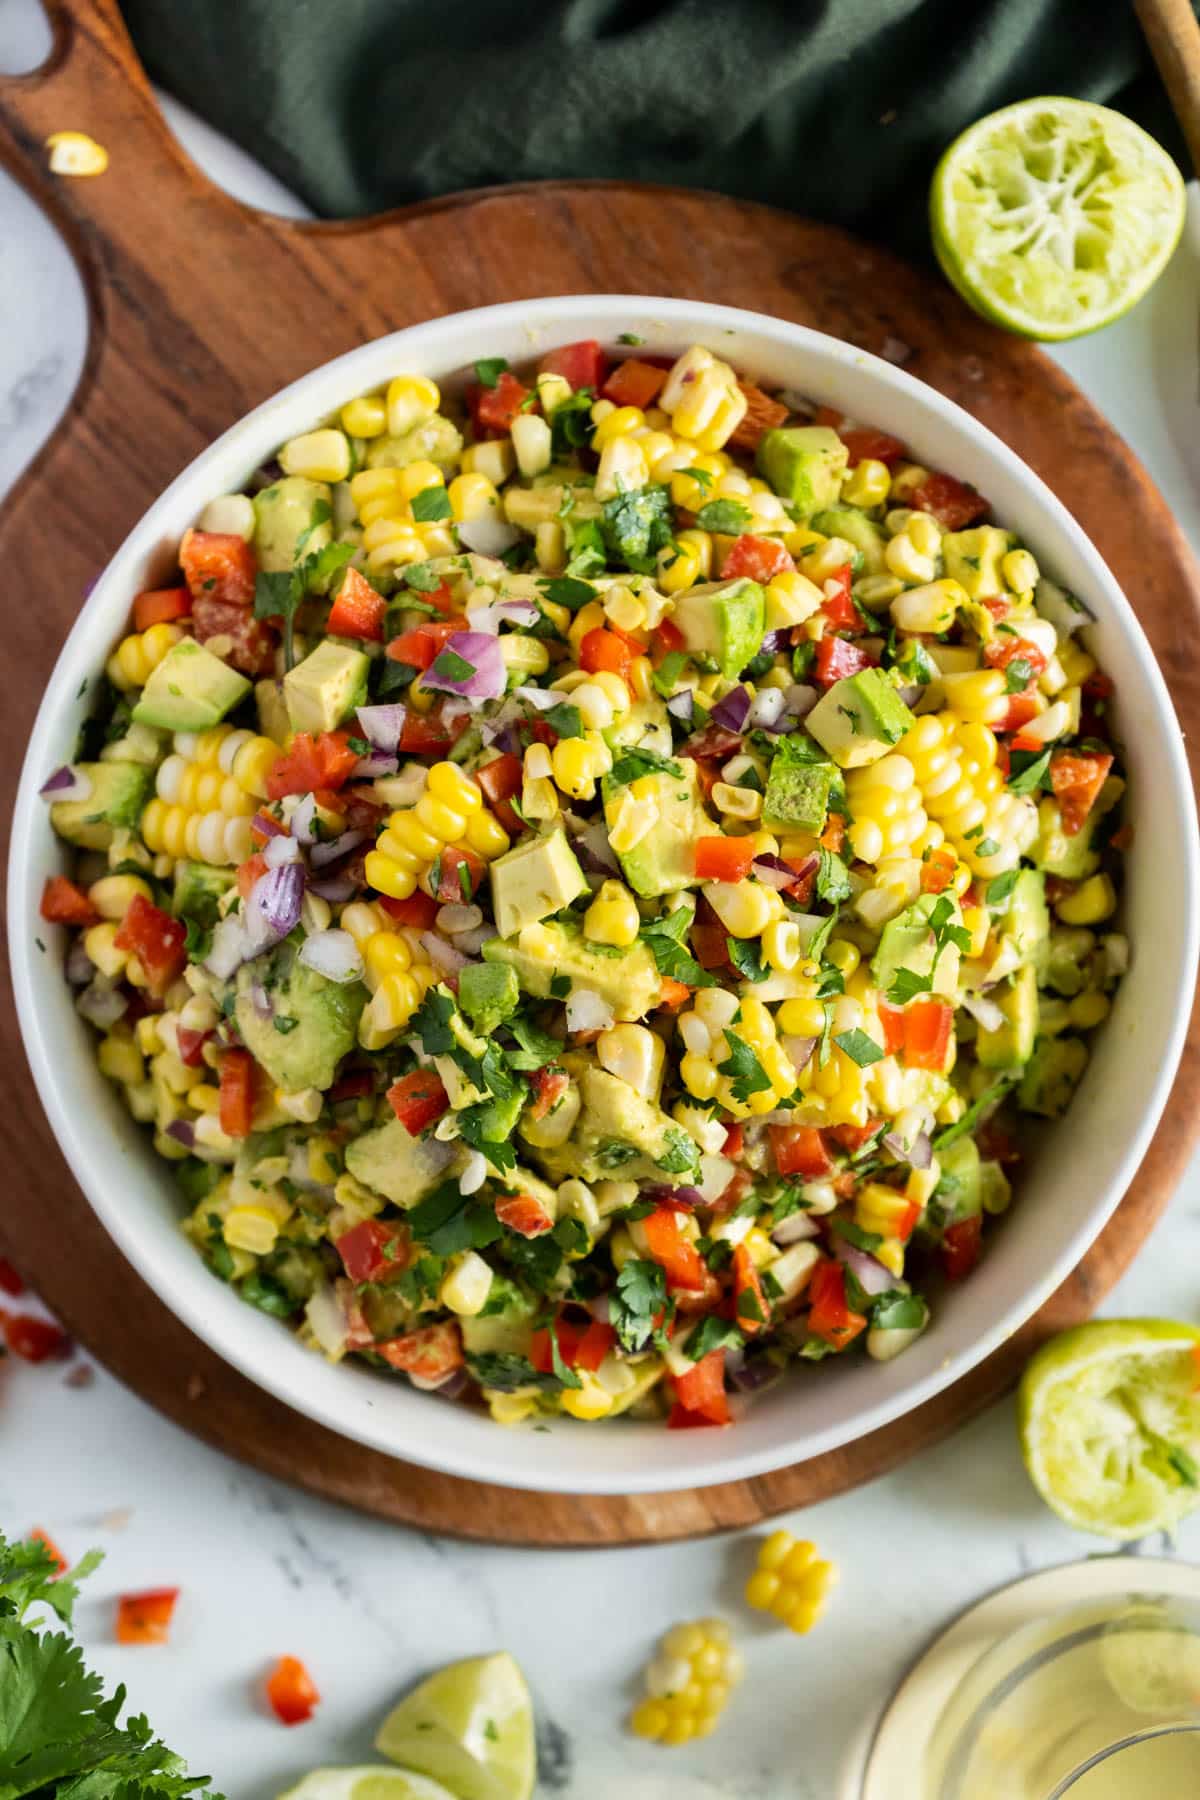 Bowl with corn salad.